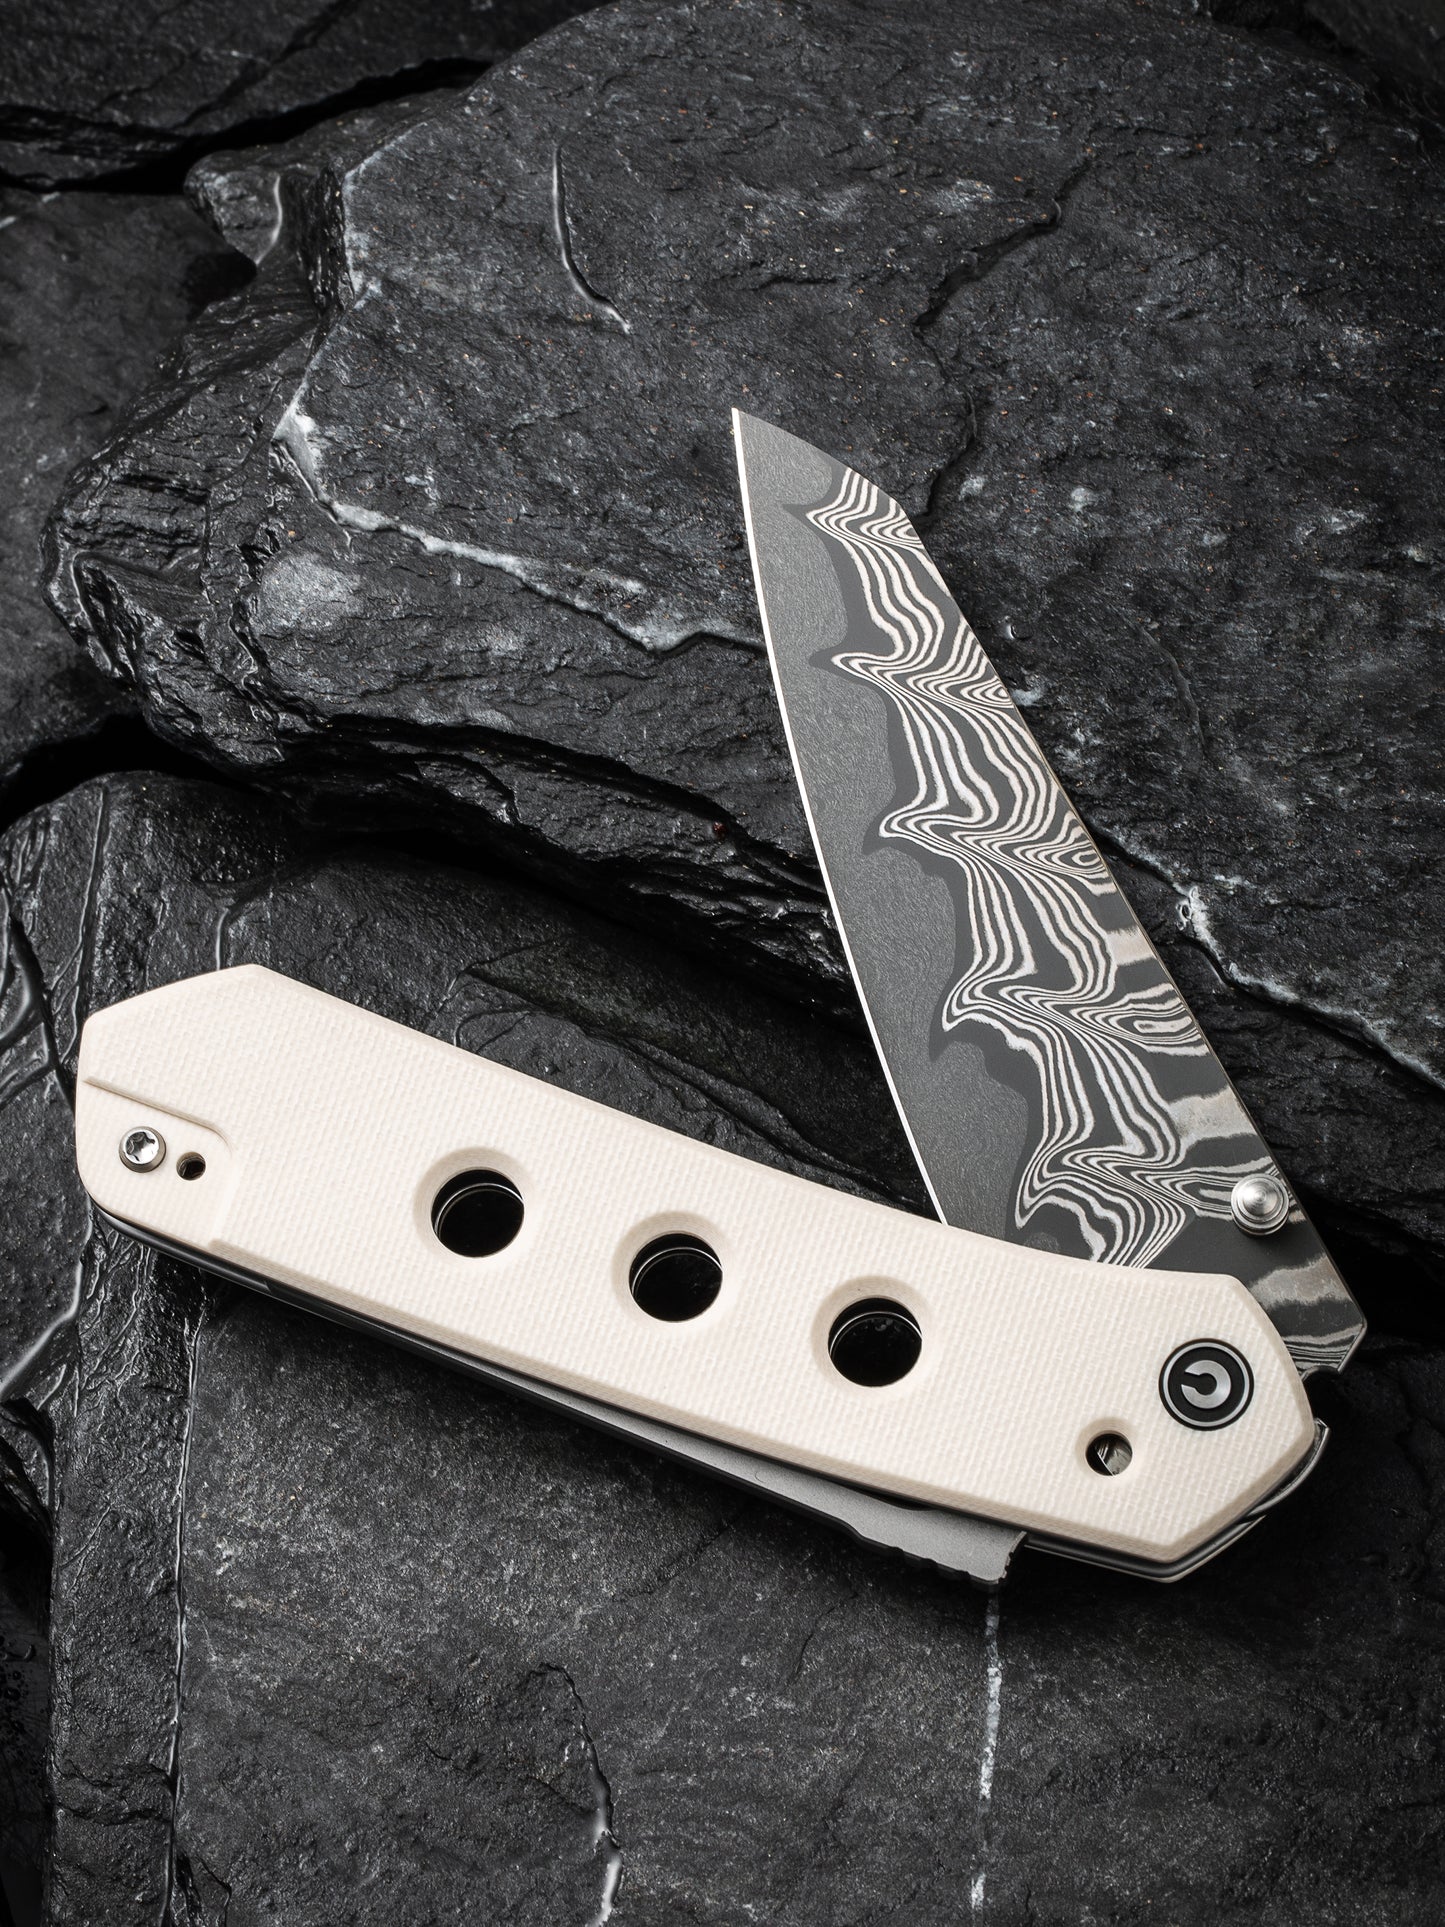 Civivi Vision FG 3.54" Damascus Ivory G10 Folding Knife by Snecx C22036-DS1